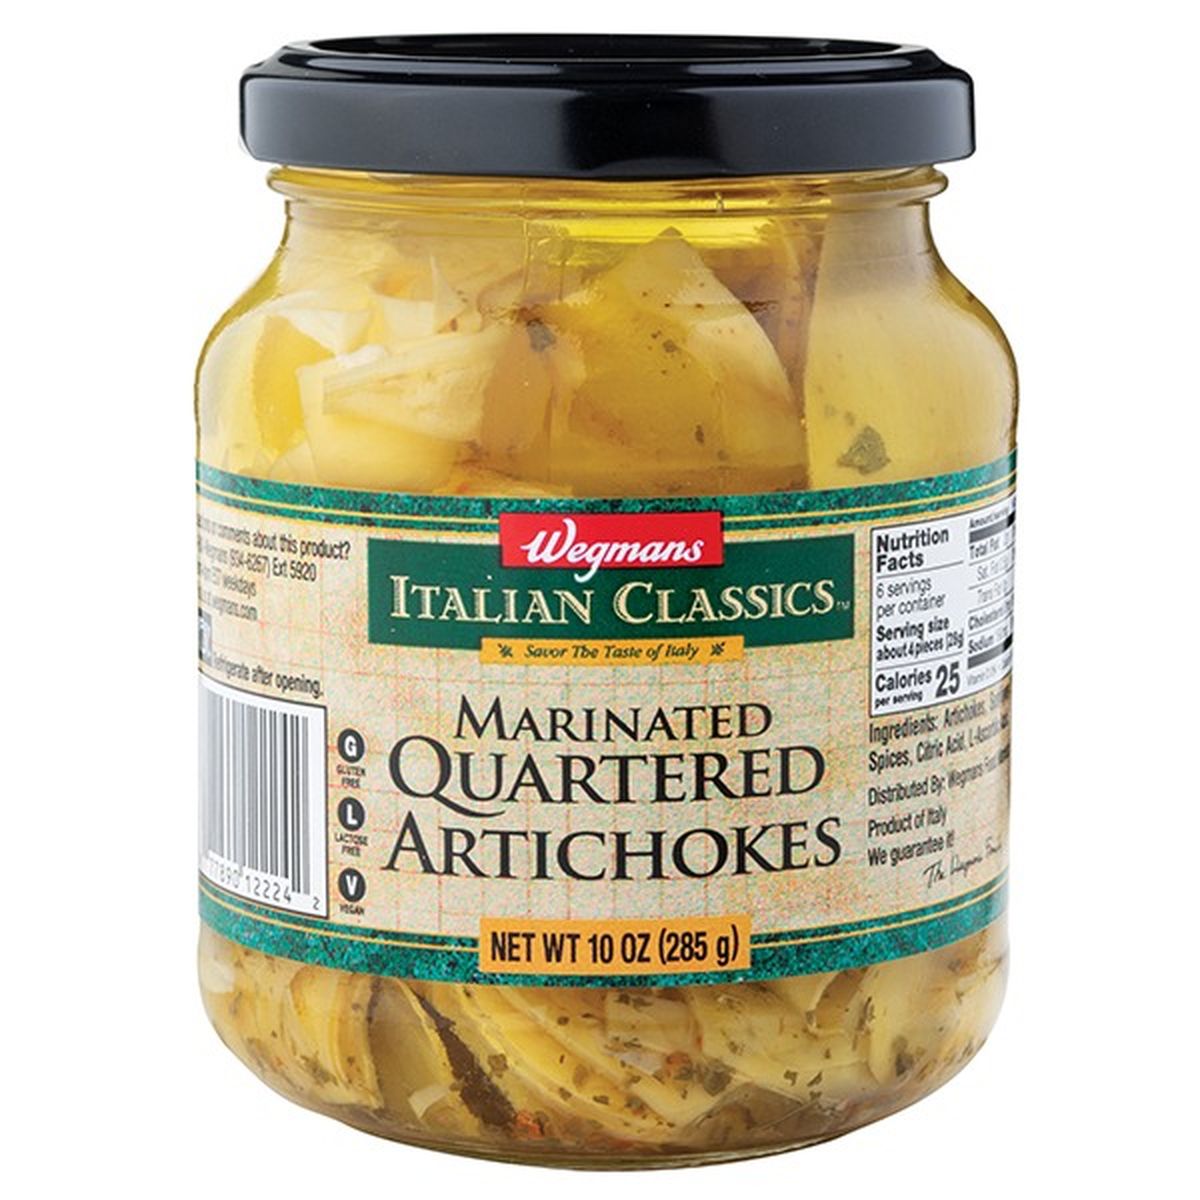 Calories in Wegmans Italian Classics Artichokes, Marinated Quartered